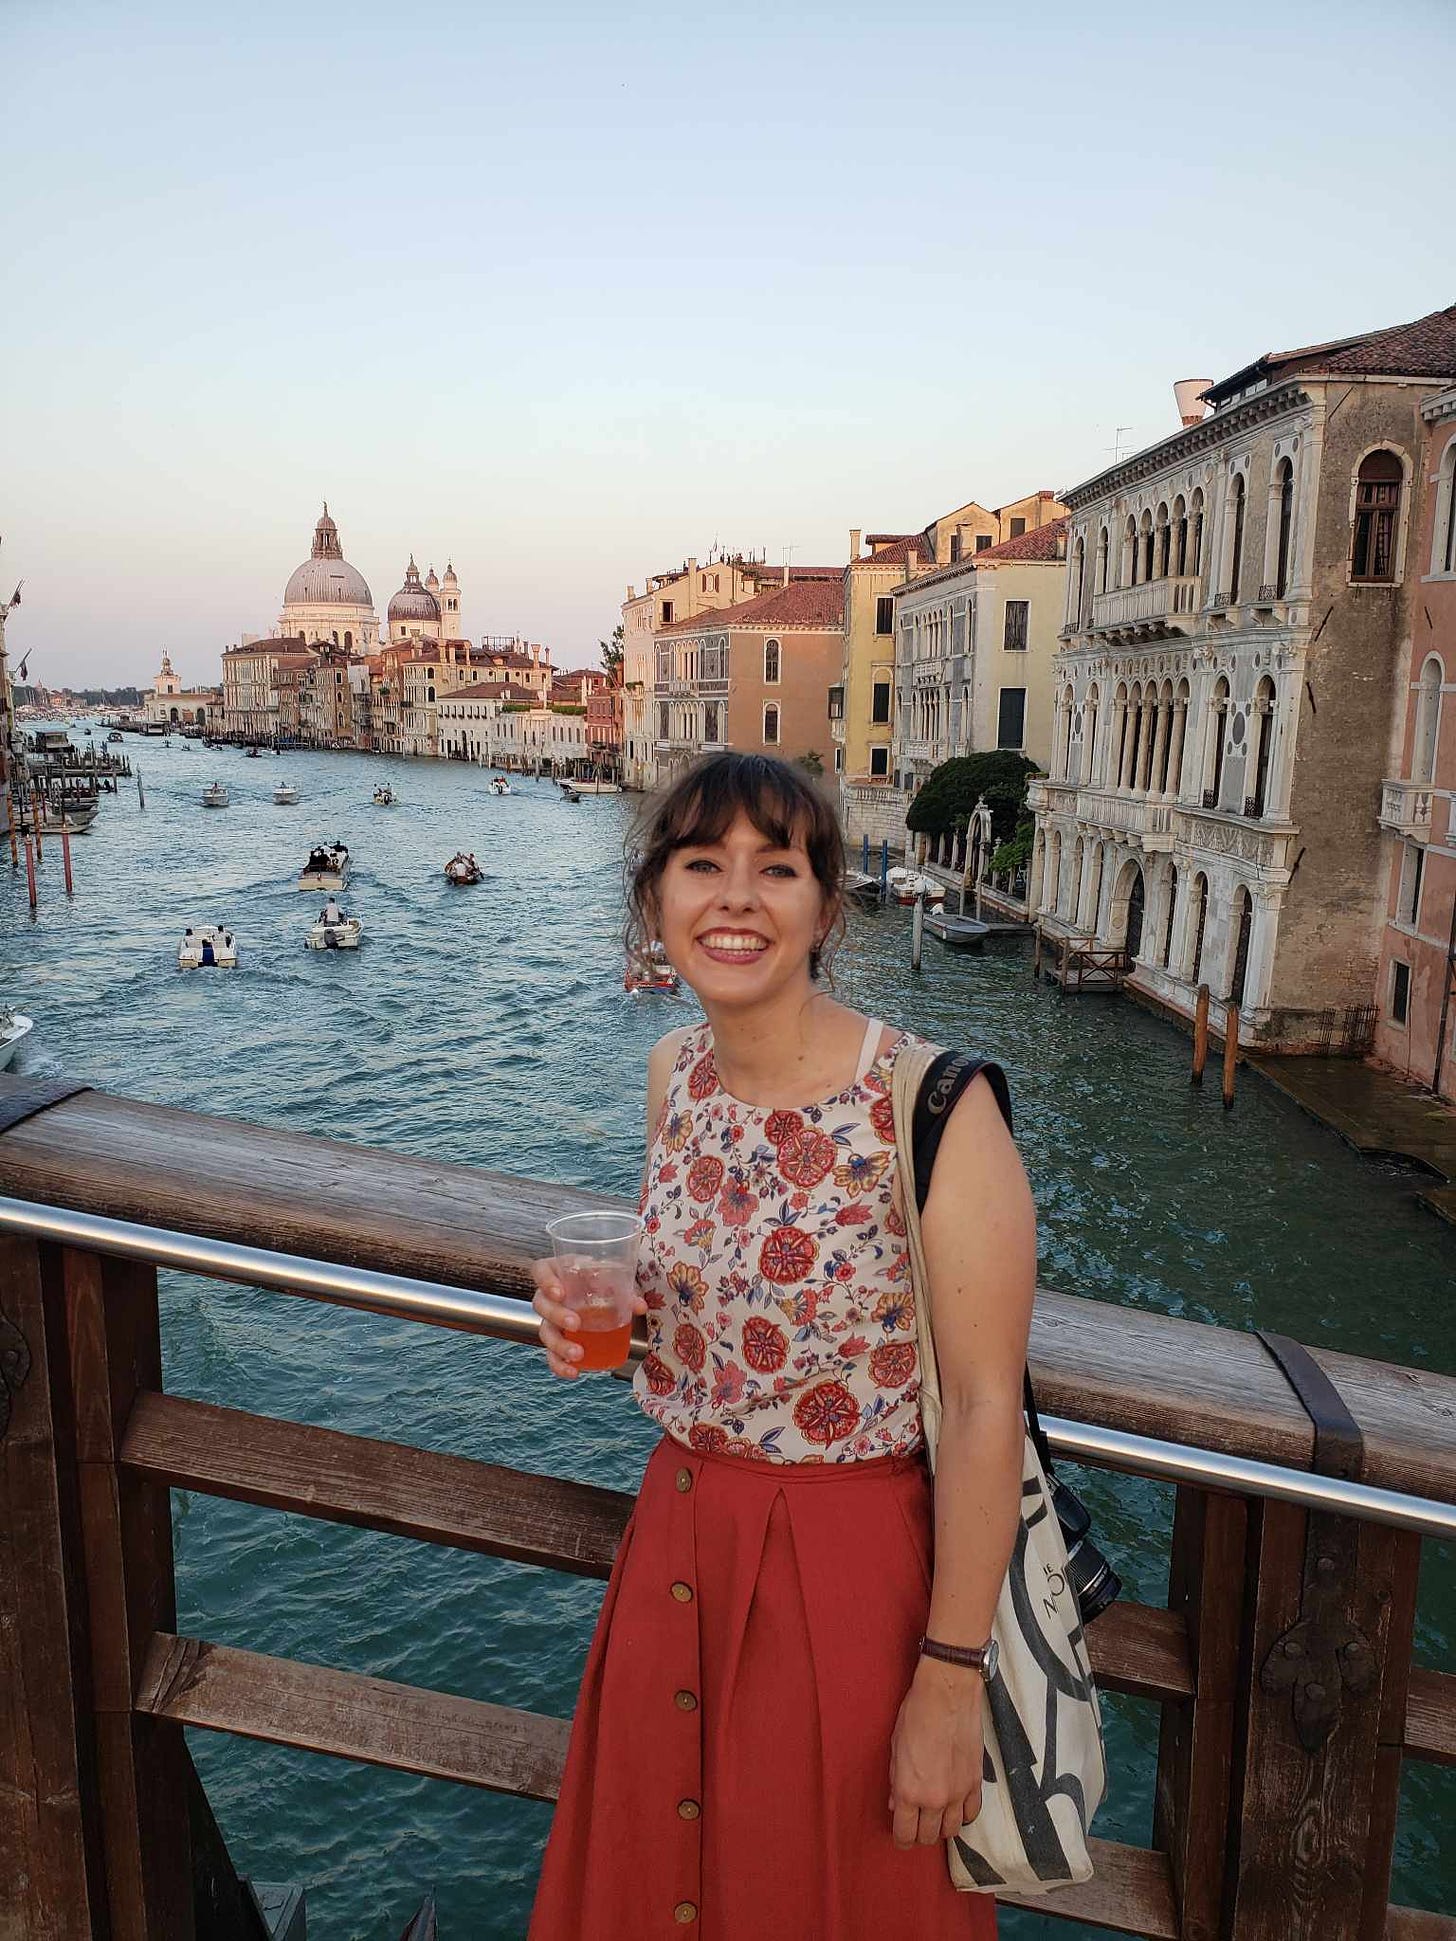 Emily on a bridge in Venice